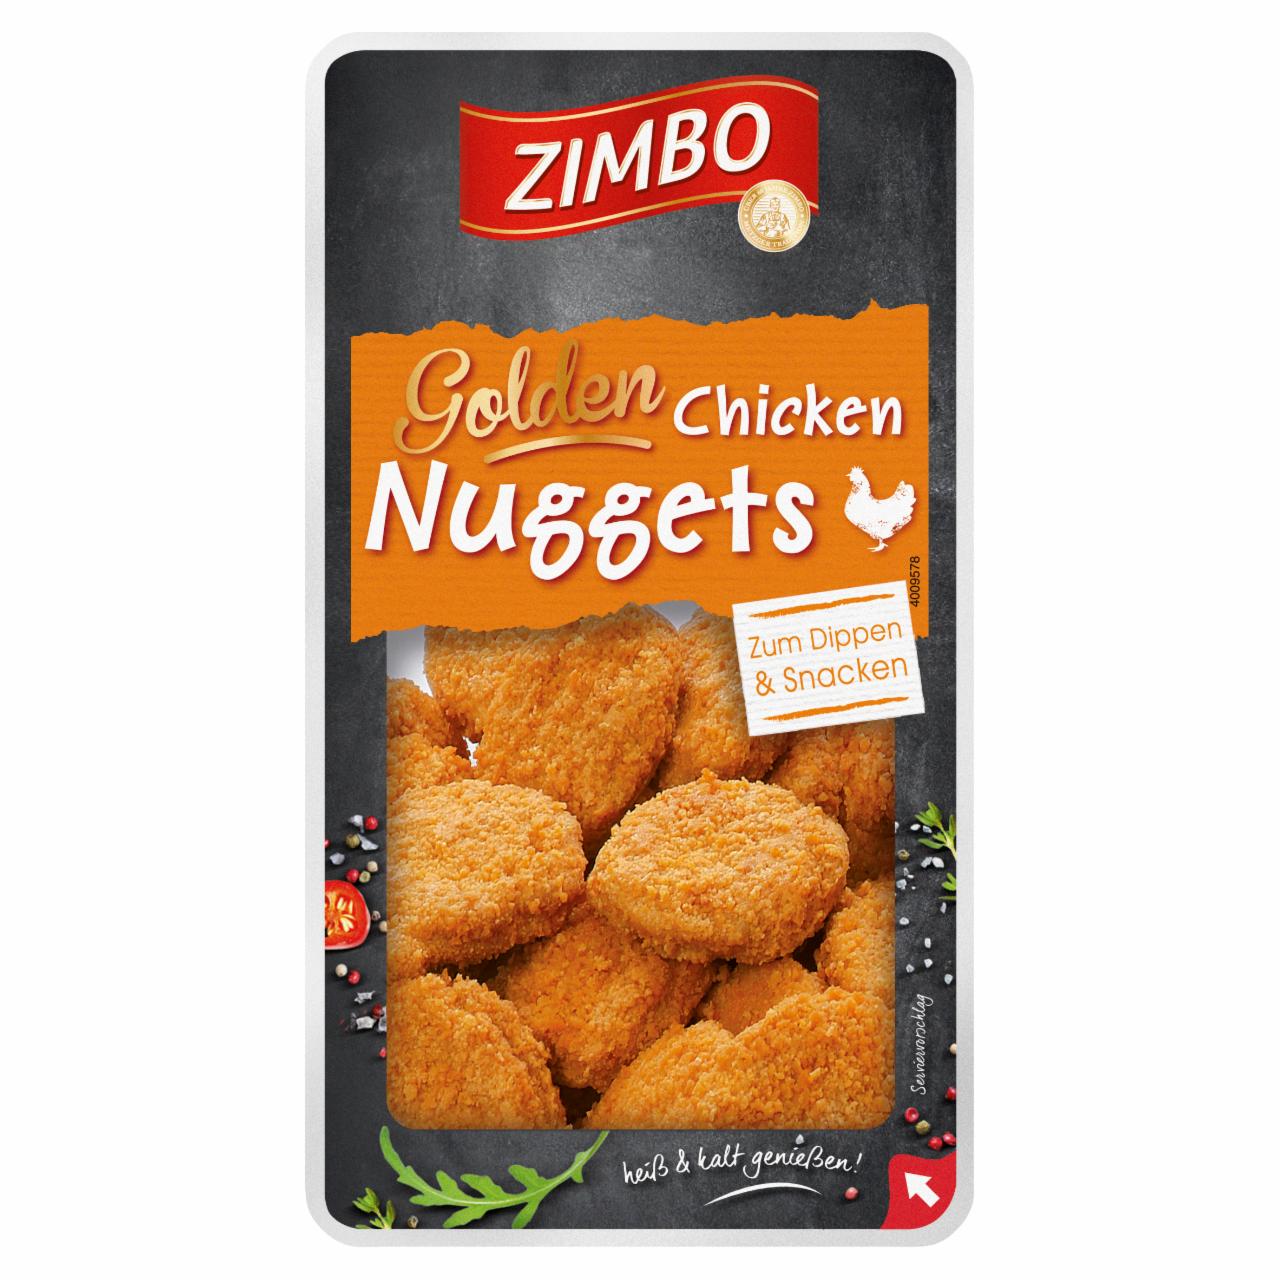 Képek - Zimbo Golden csirke nuggets 250 g